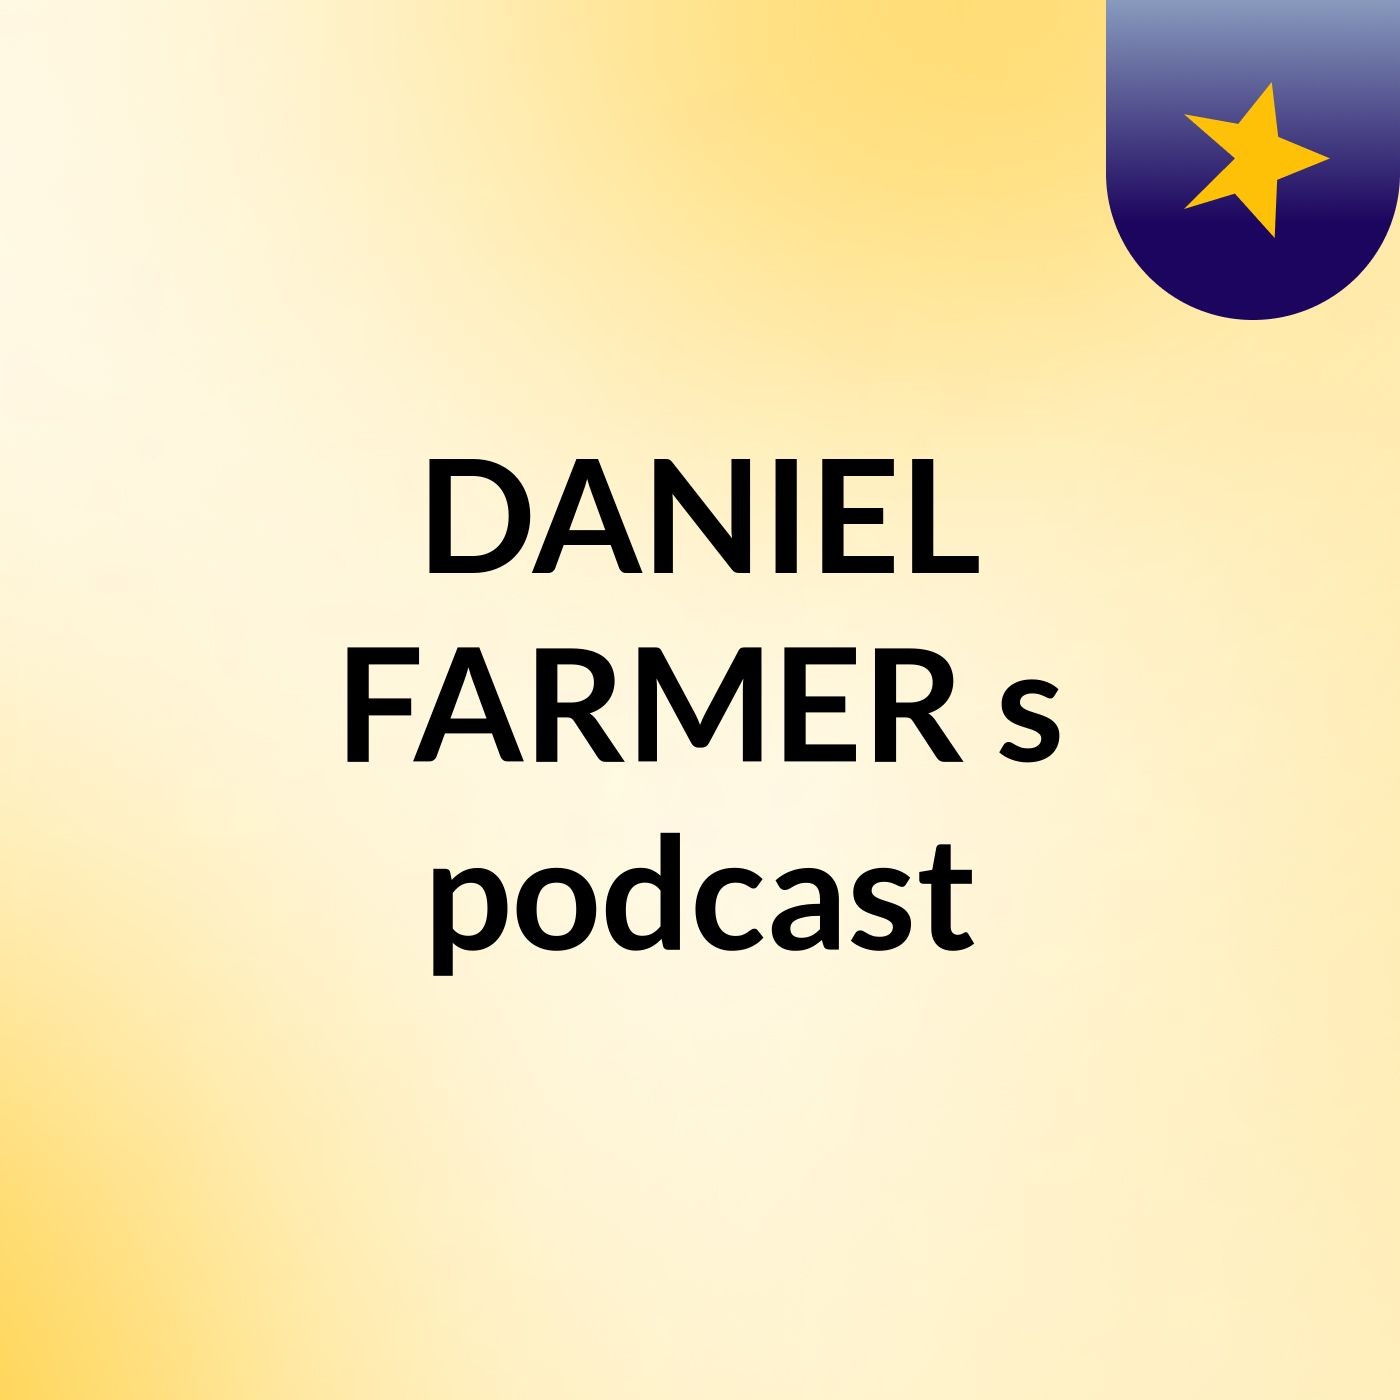 Episode 2 - DANIEL FARMER's podcast